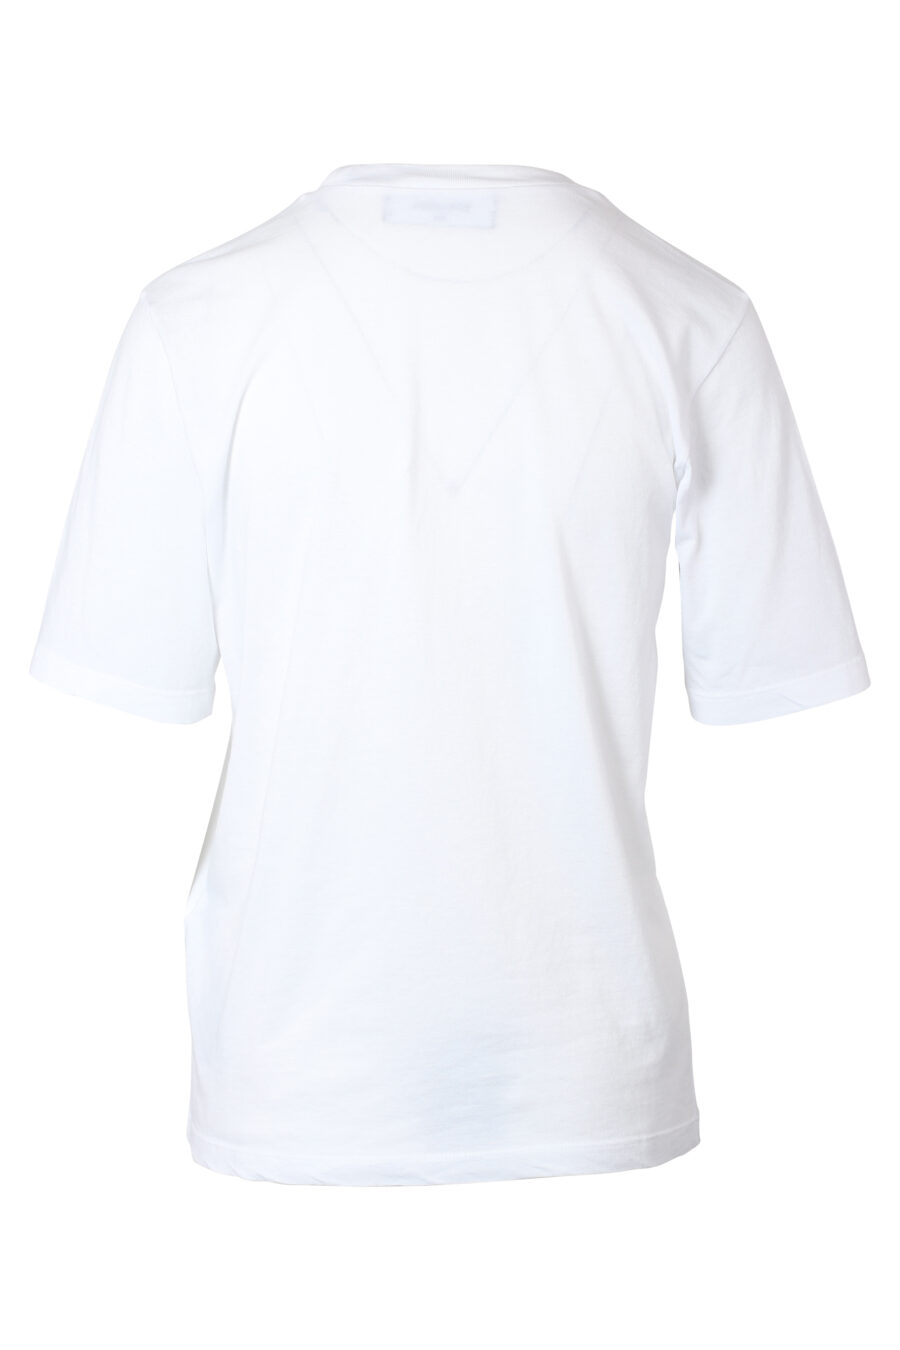 T-shirt branca com maxilogo multicolorido - IMG 9782